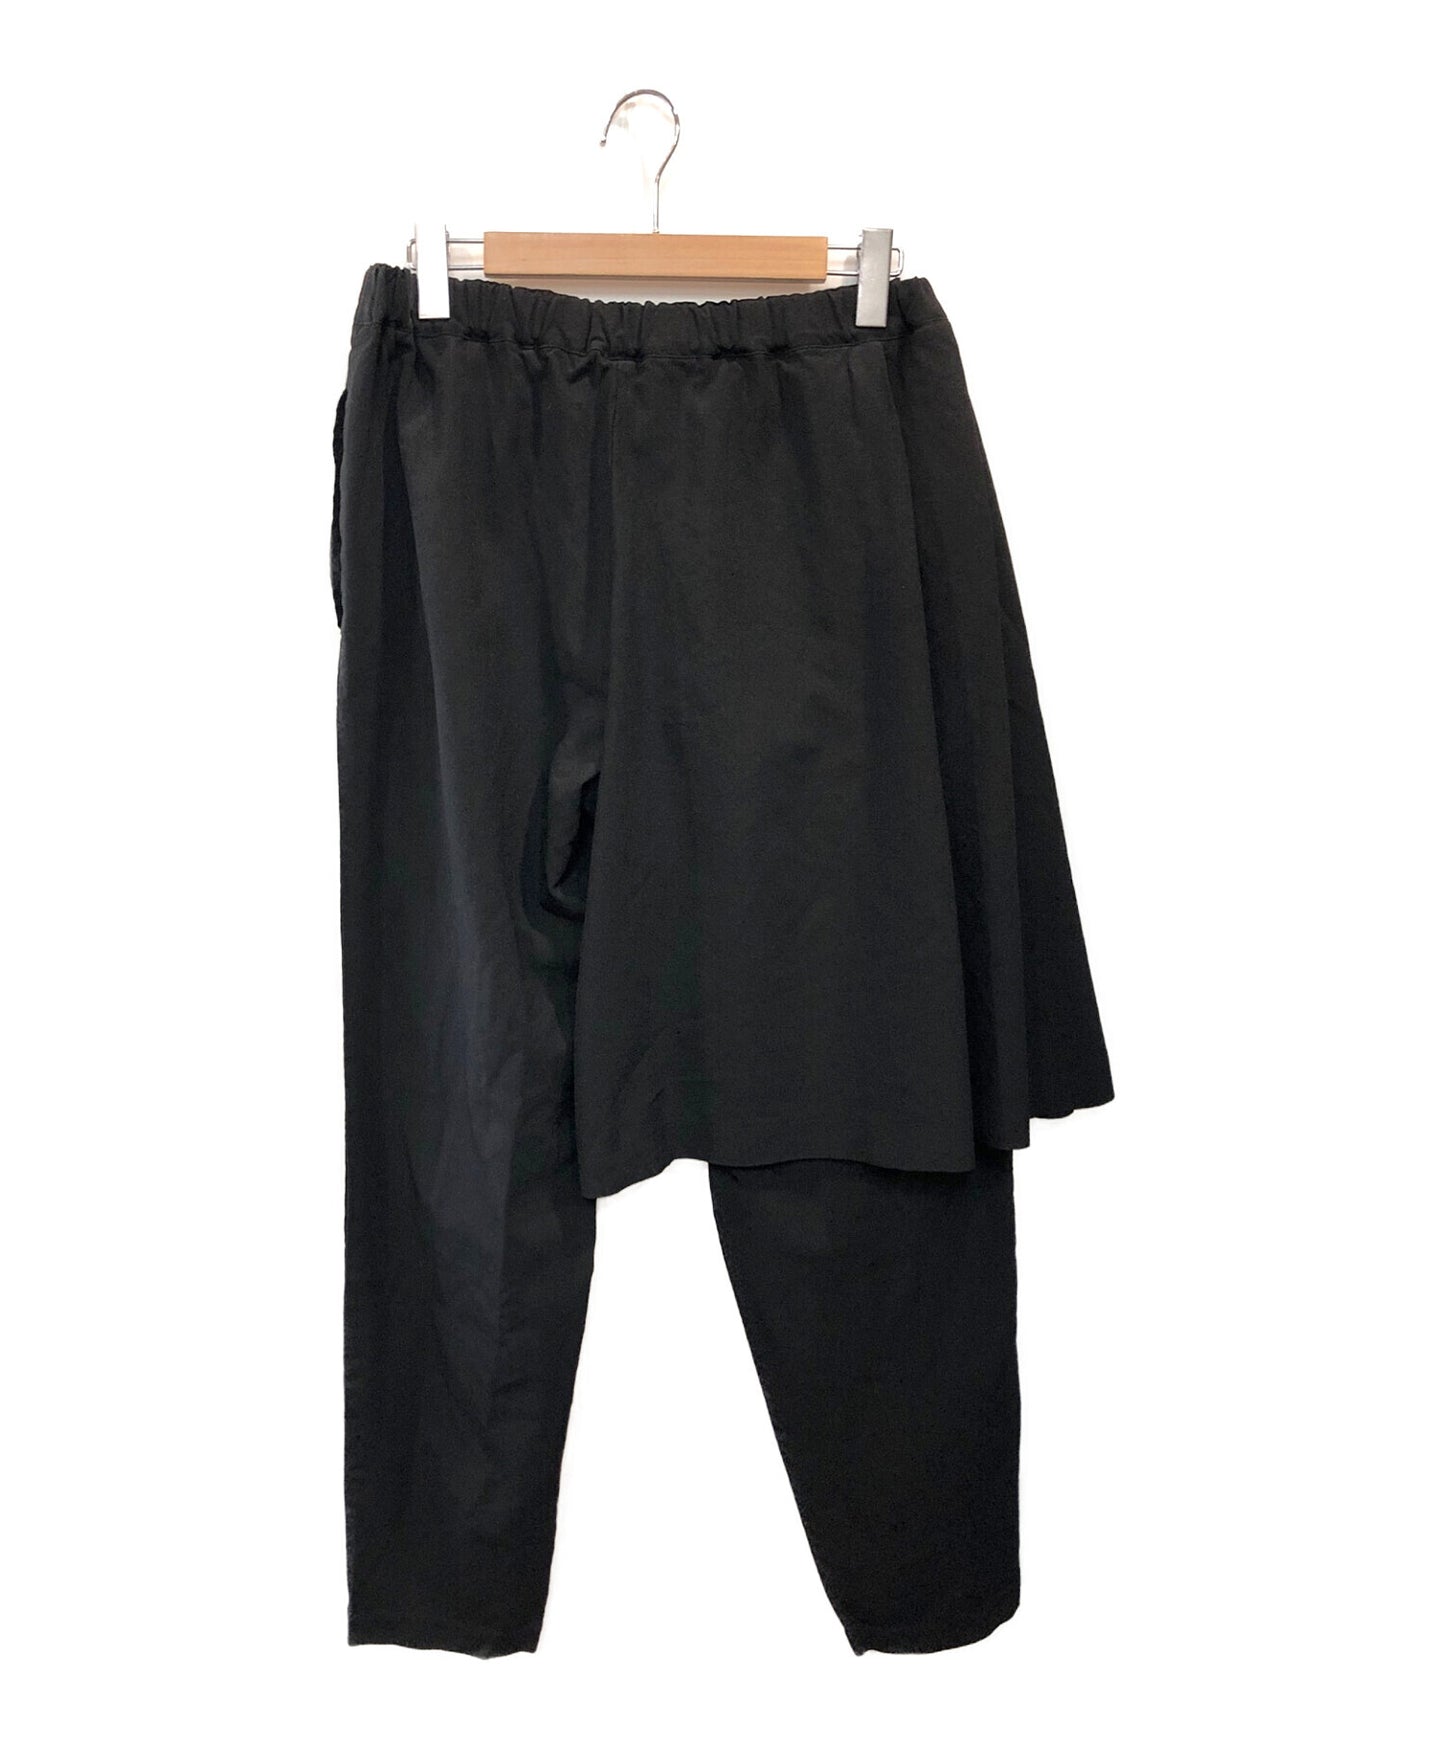 Black Comme des Garcons กระโปรงกางเกงขายาว 1F-P005